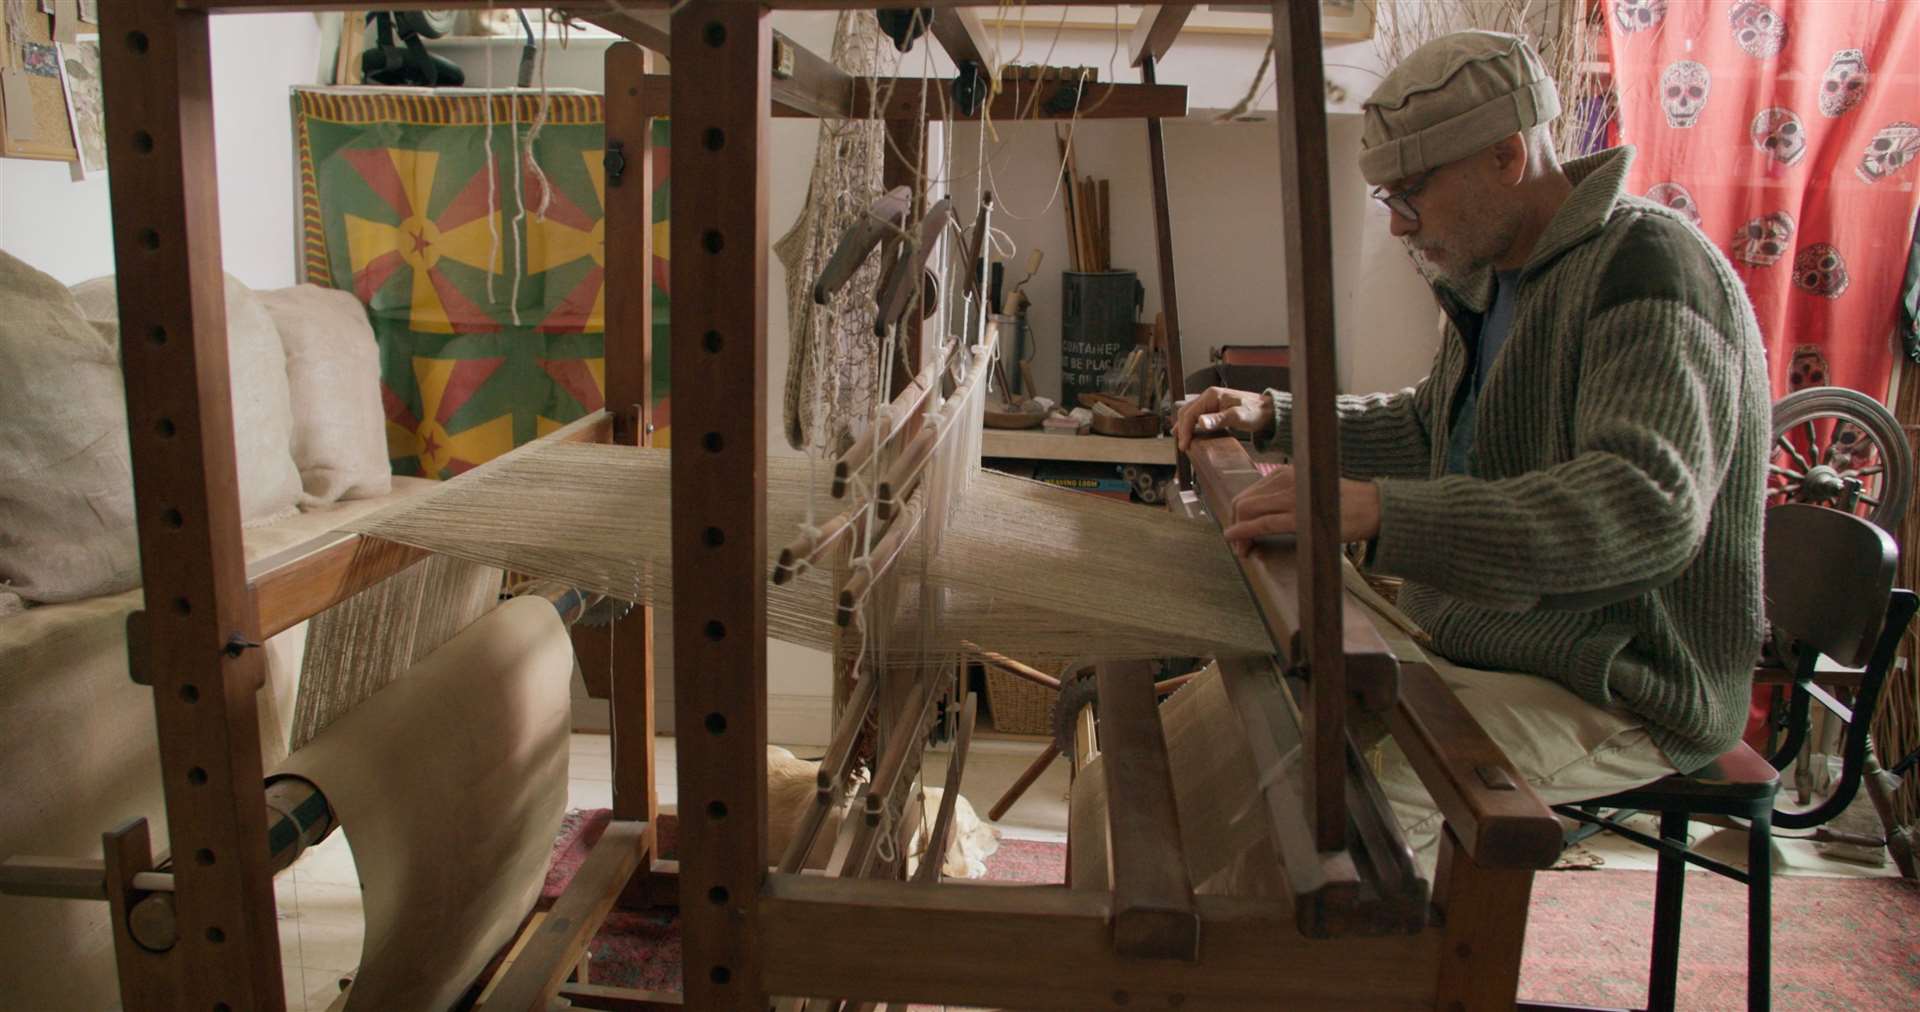 Allan Brown weaving nettles to make a dress (Dylan Howitt/PA)